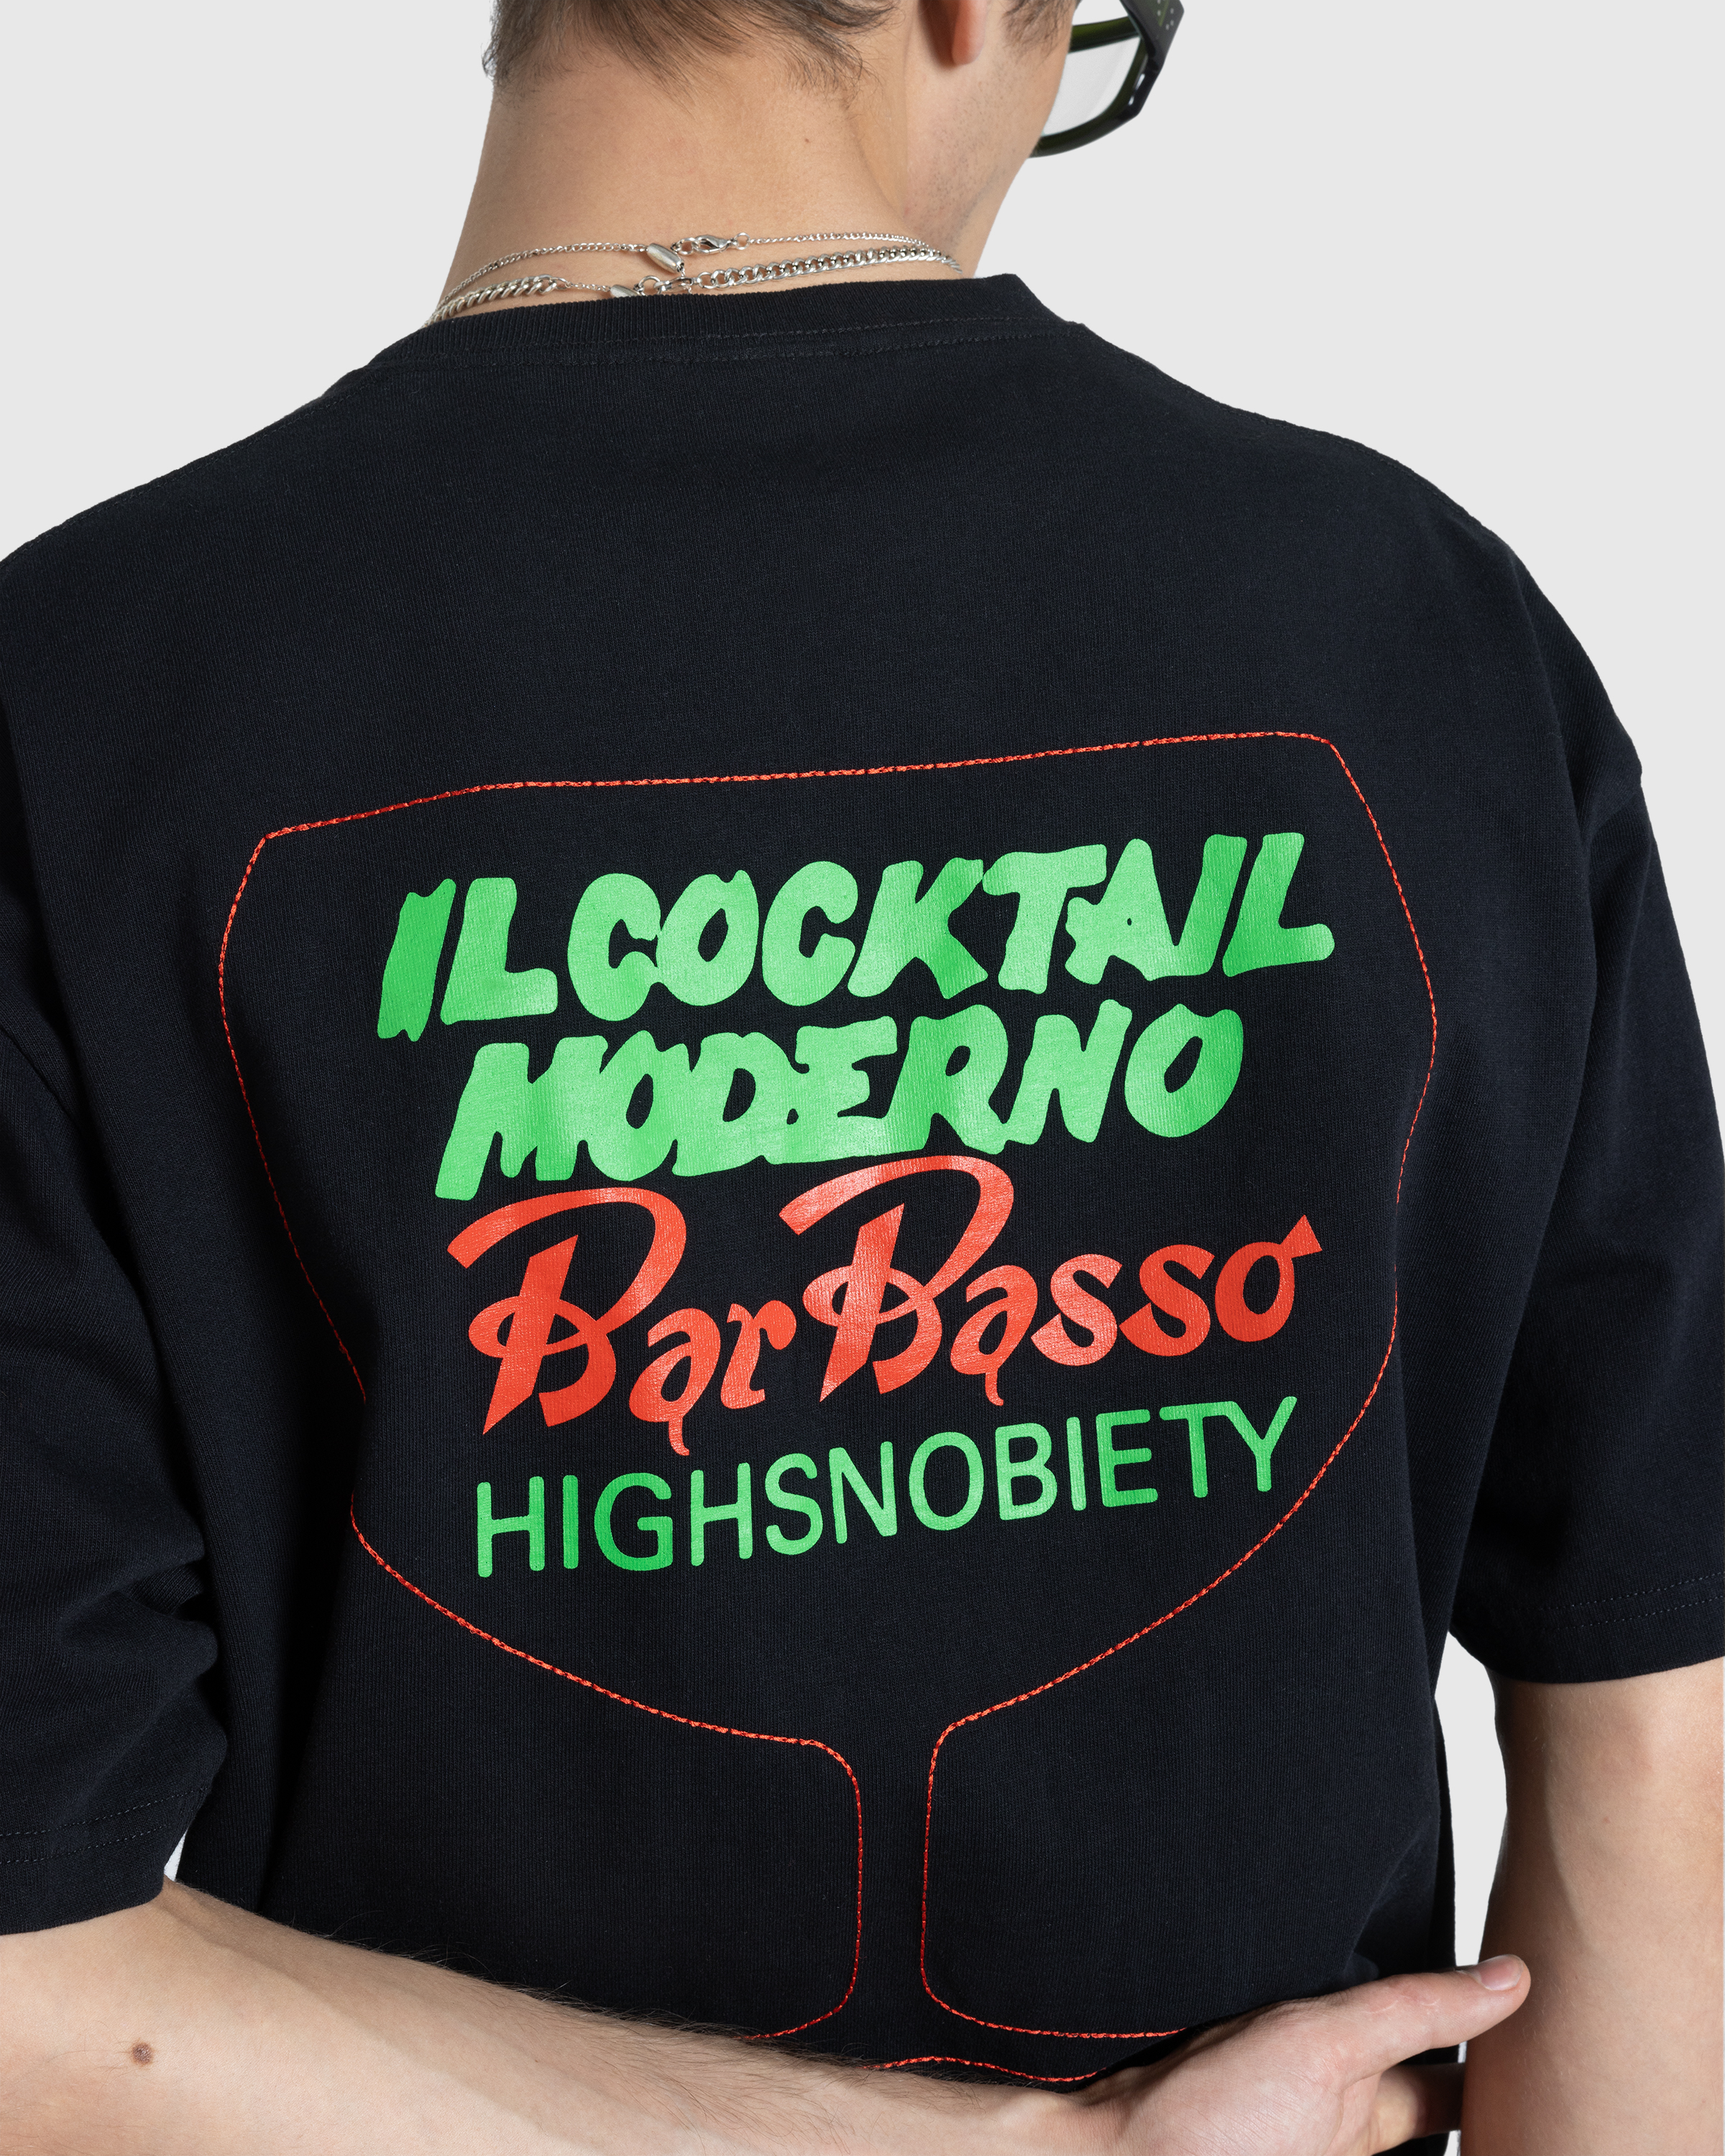 Highsnobiety x Bar Basso – Sbagliato T-Shirt Black - T-Shirts - Black - Image 6